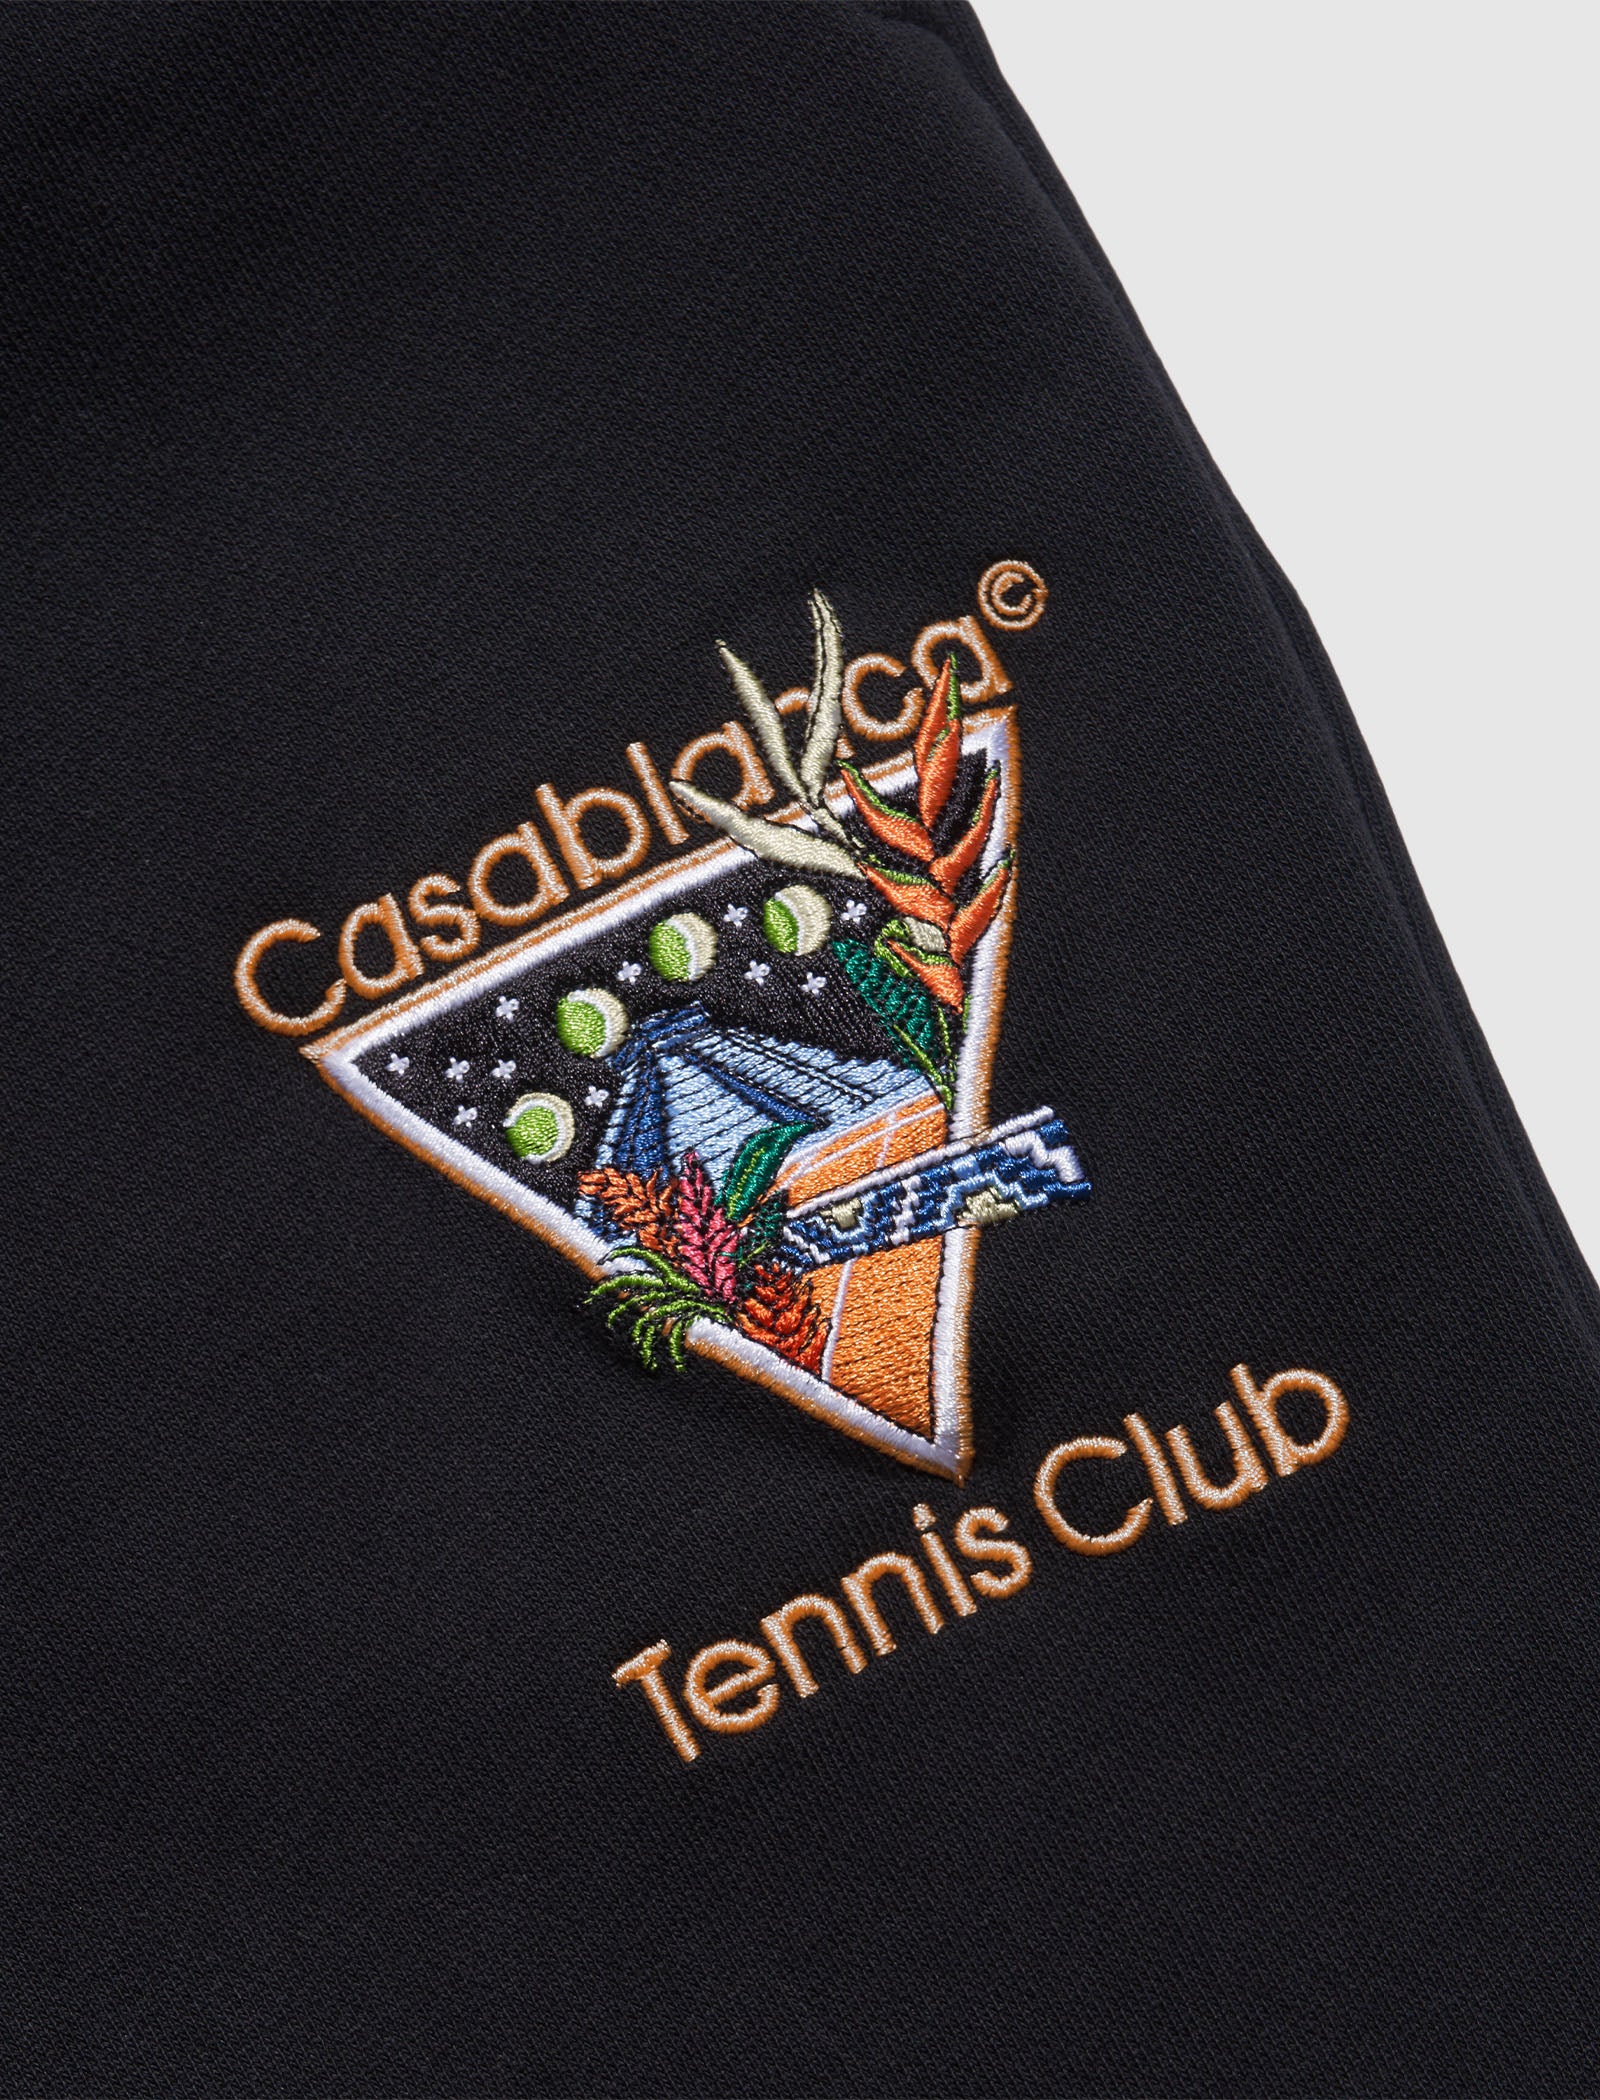 CASABLANCA TENNIS CLUB EMBROIDERED SWEATPANT